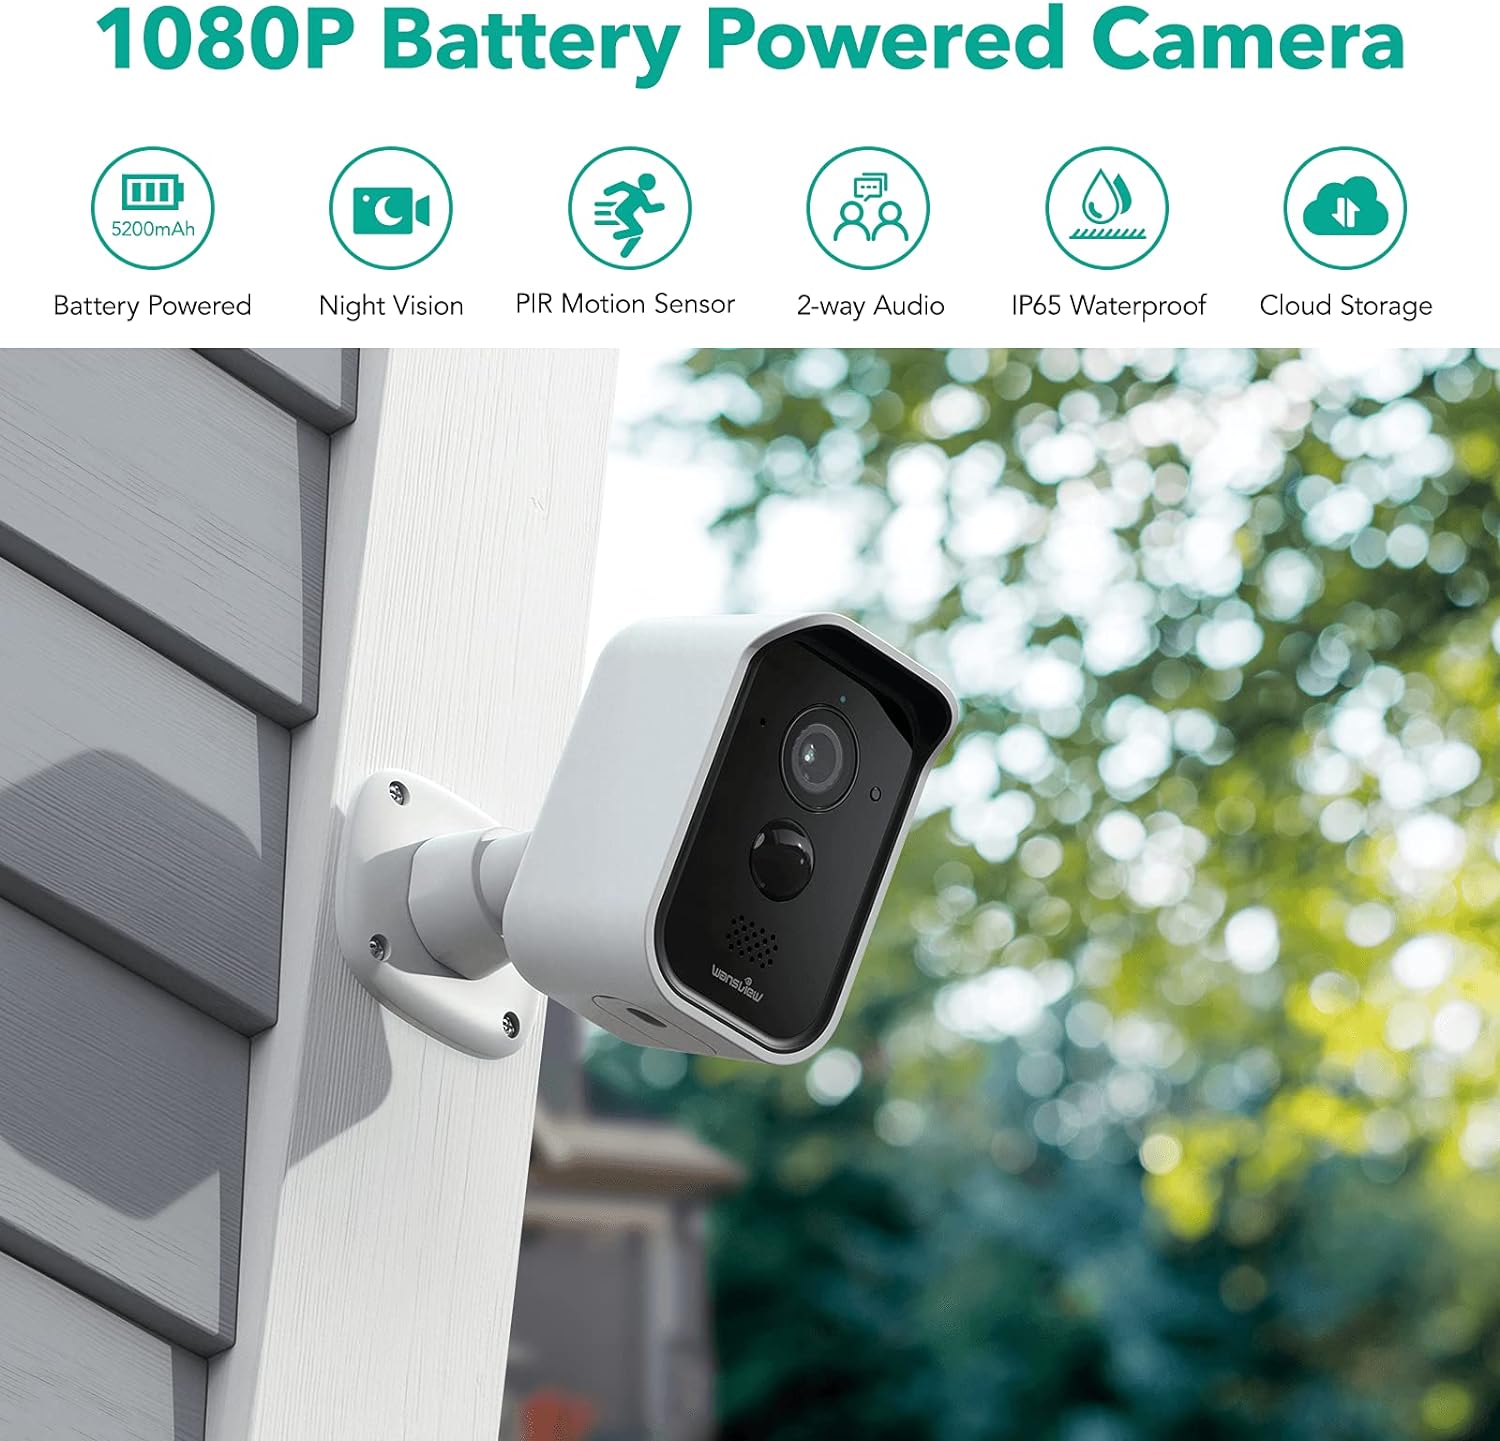 WANSVIEW  1080P Battery Powered Camera B3 - $35